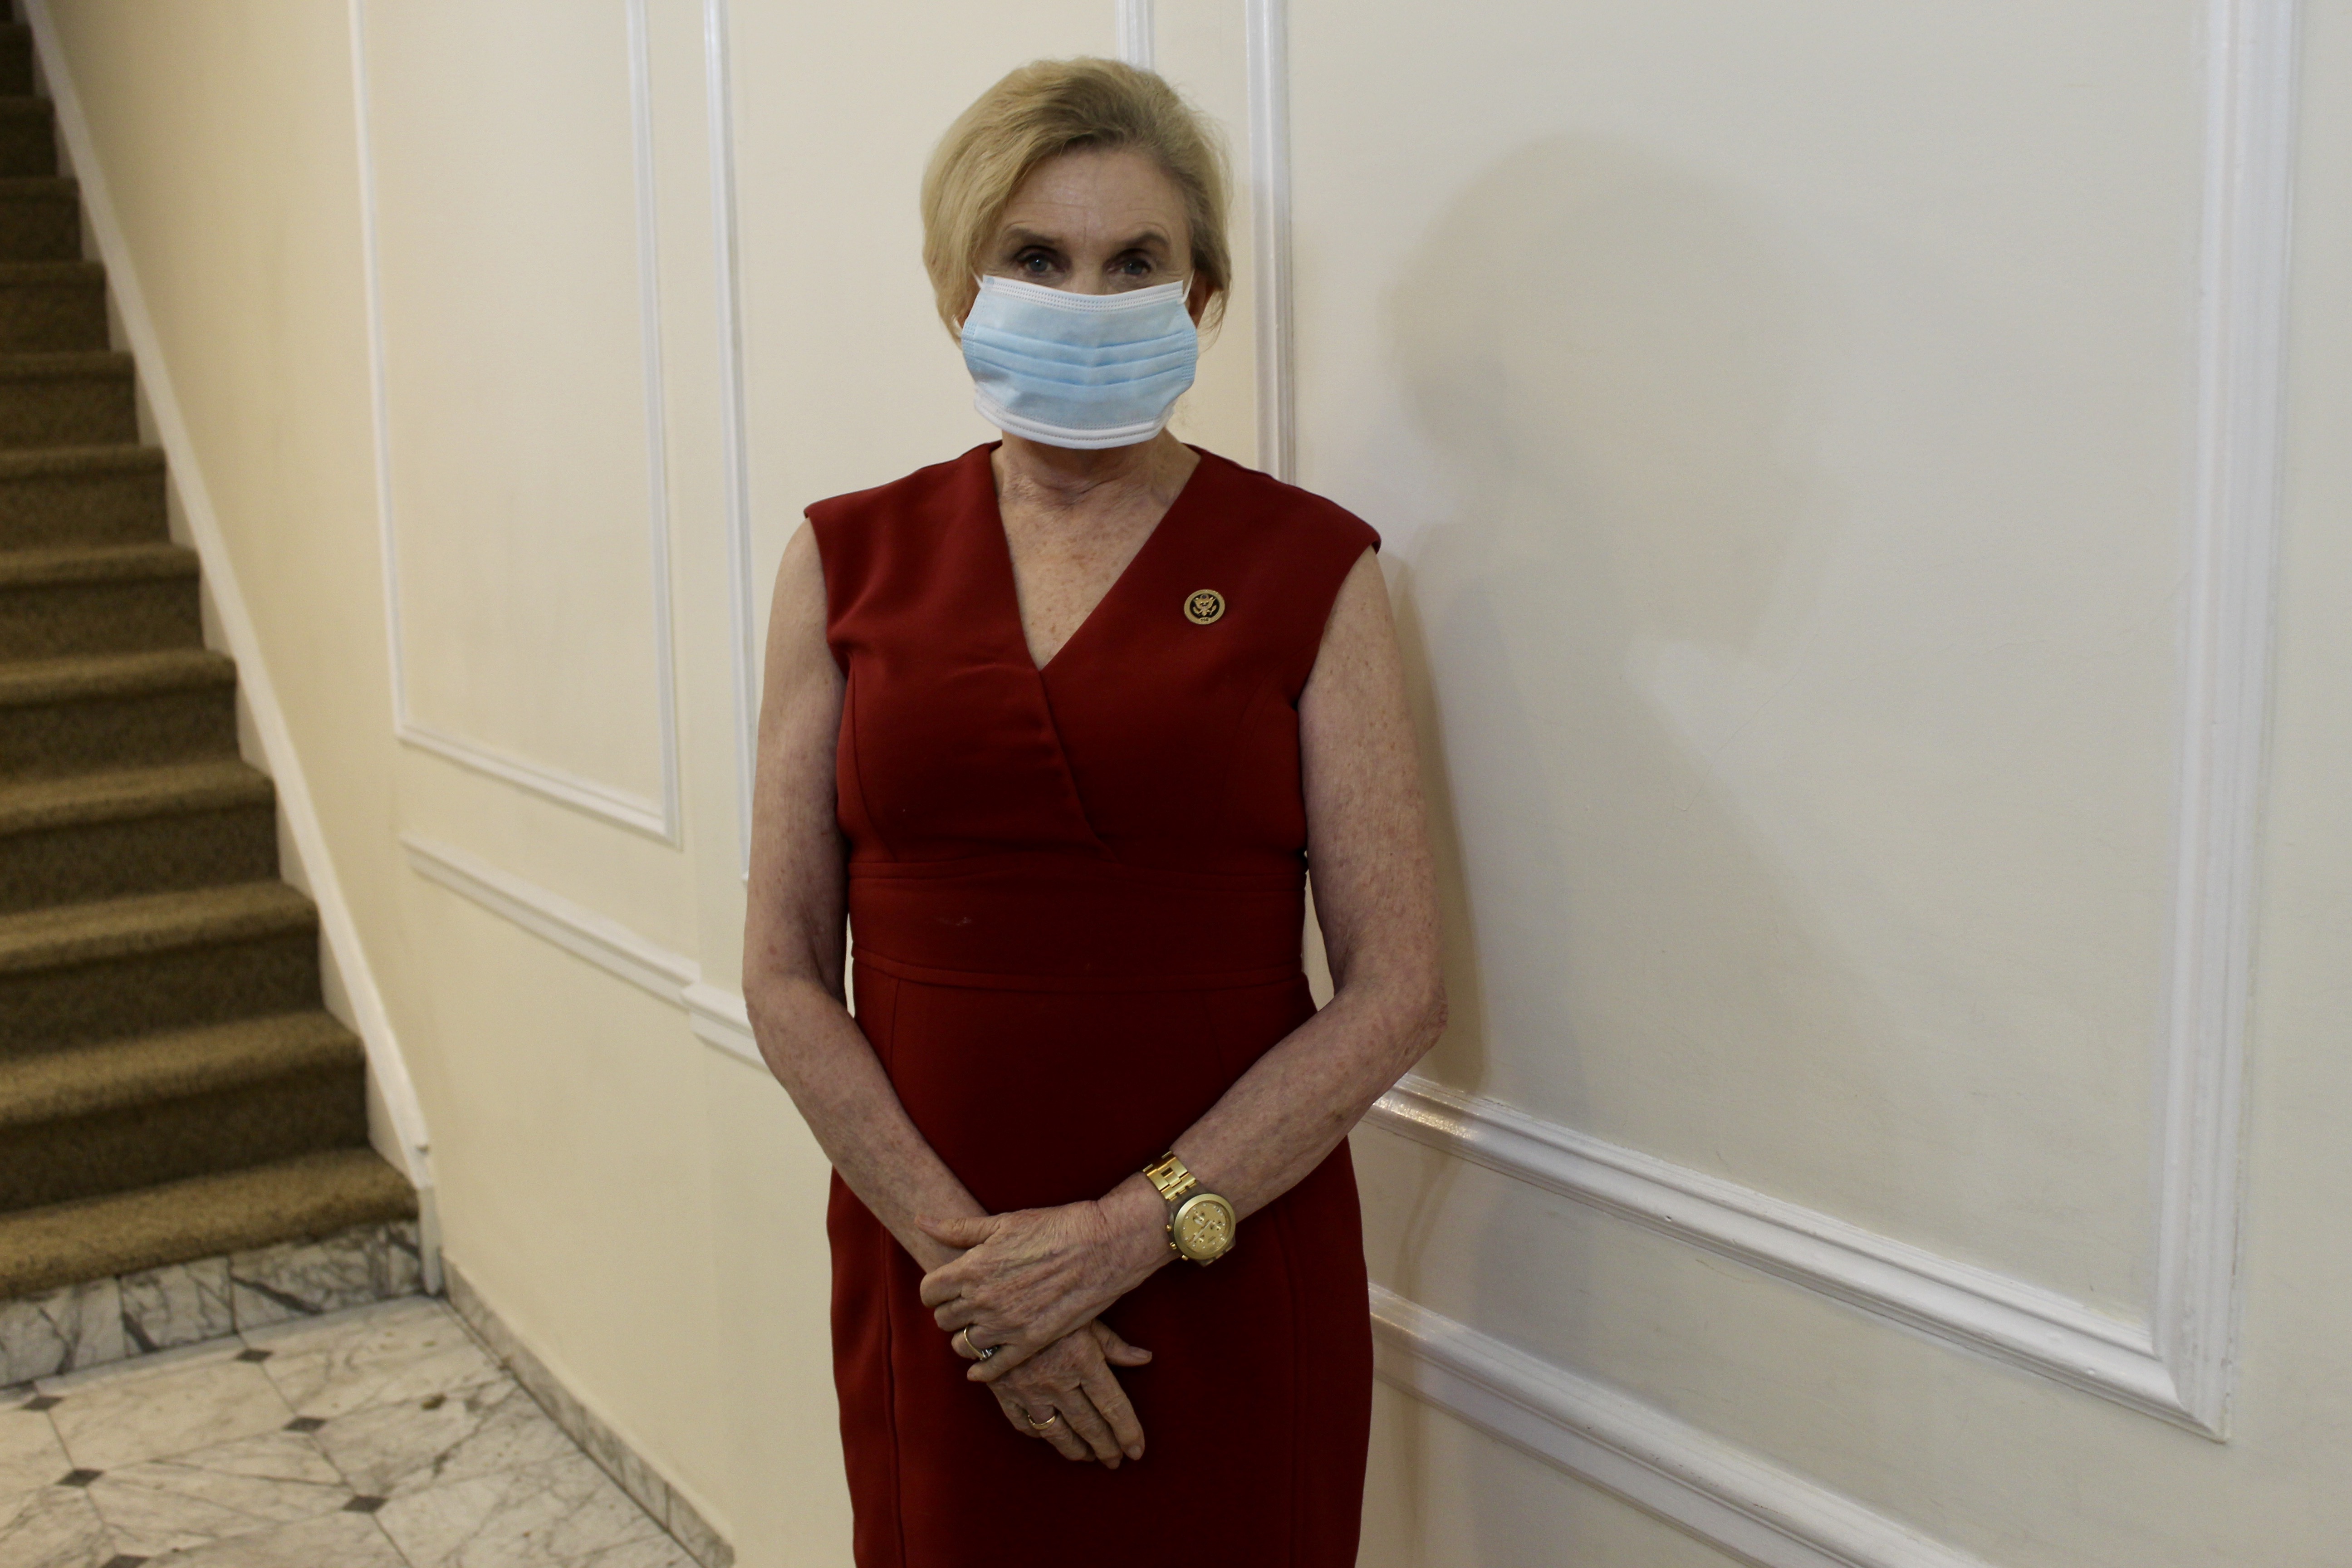 Rep. Carolyn Maloney in her mask.